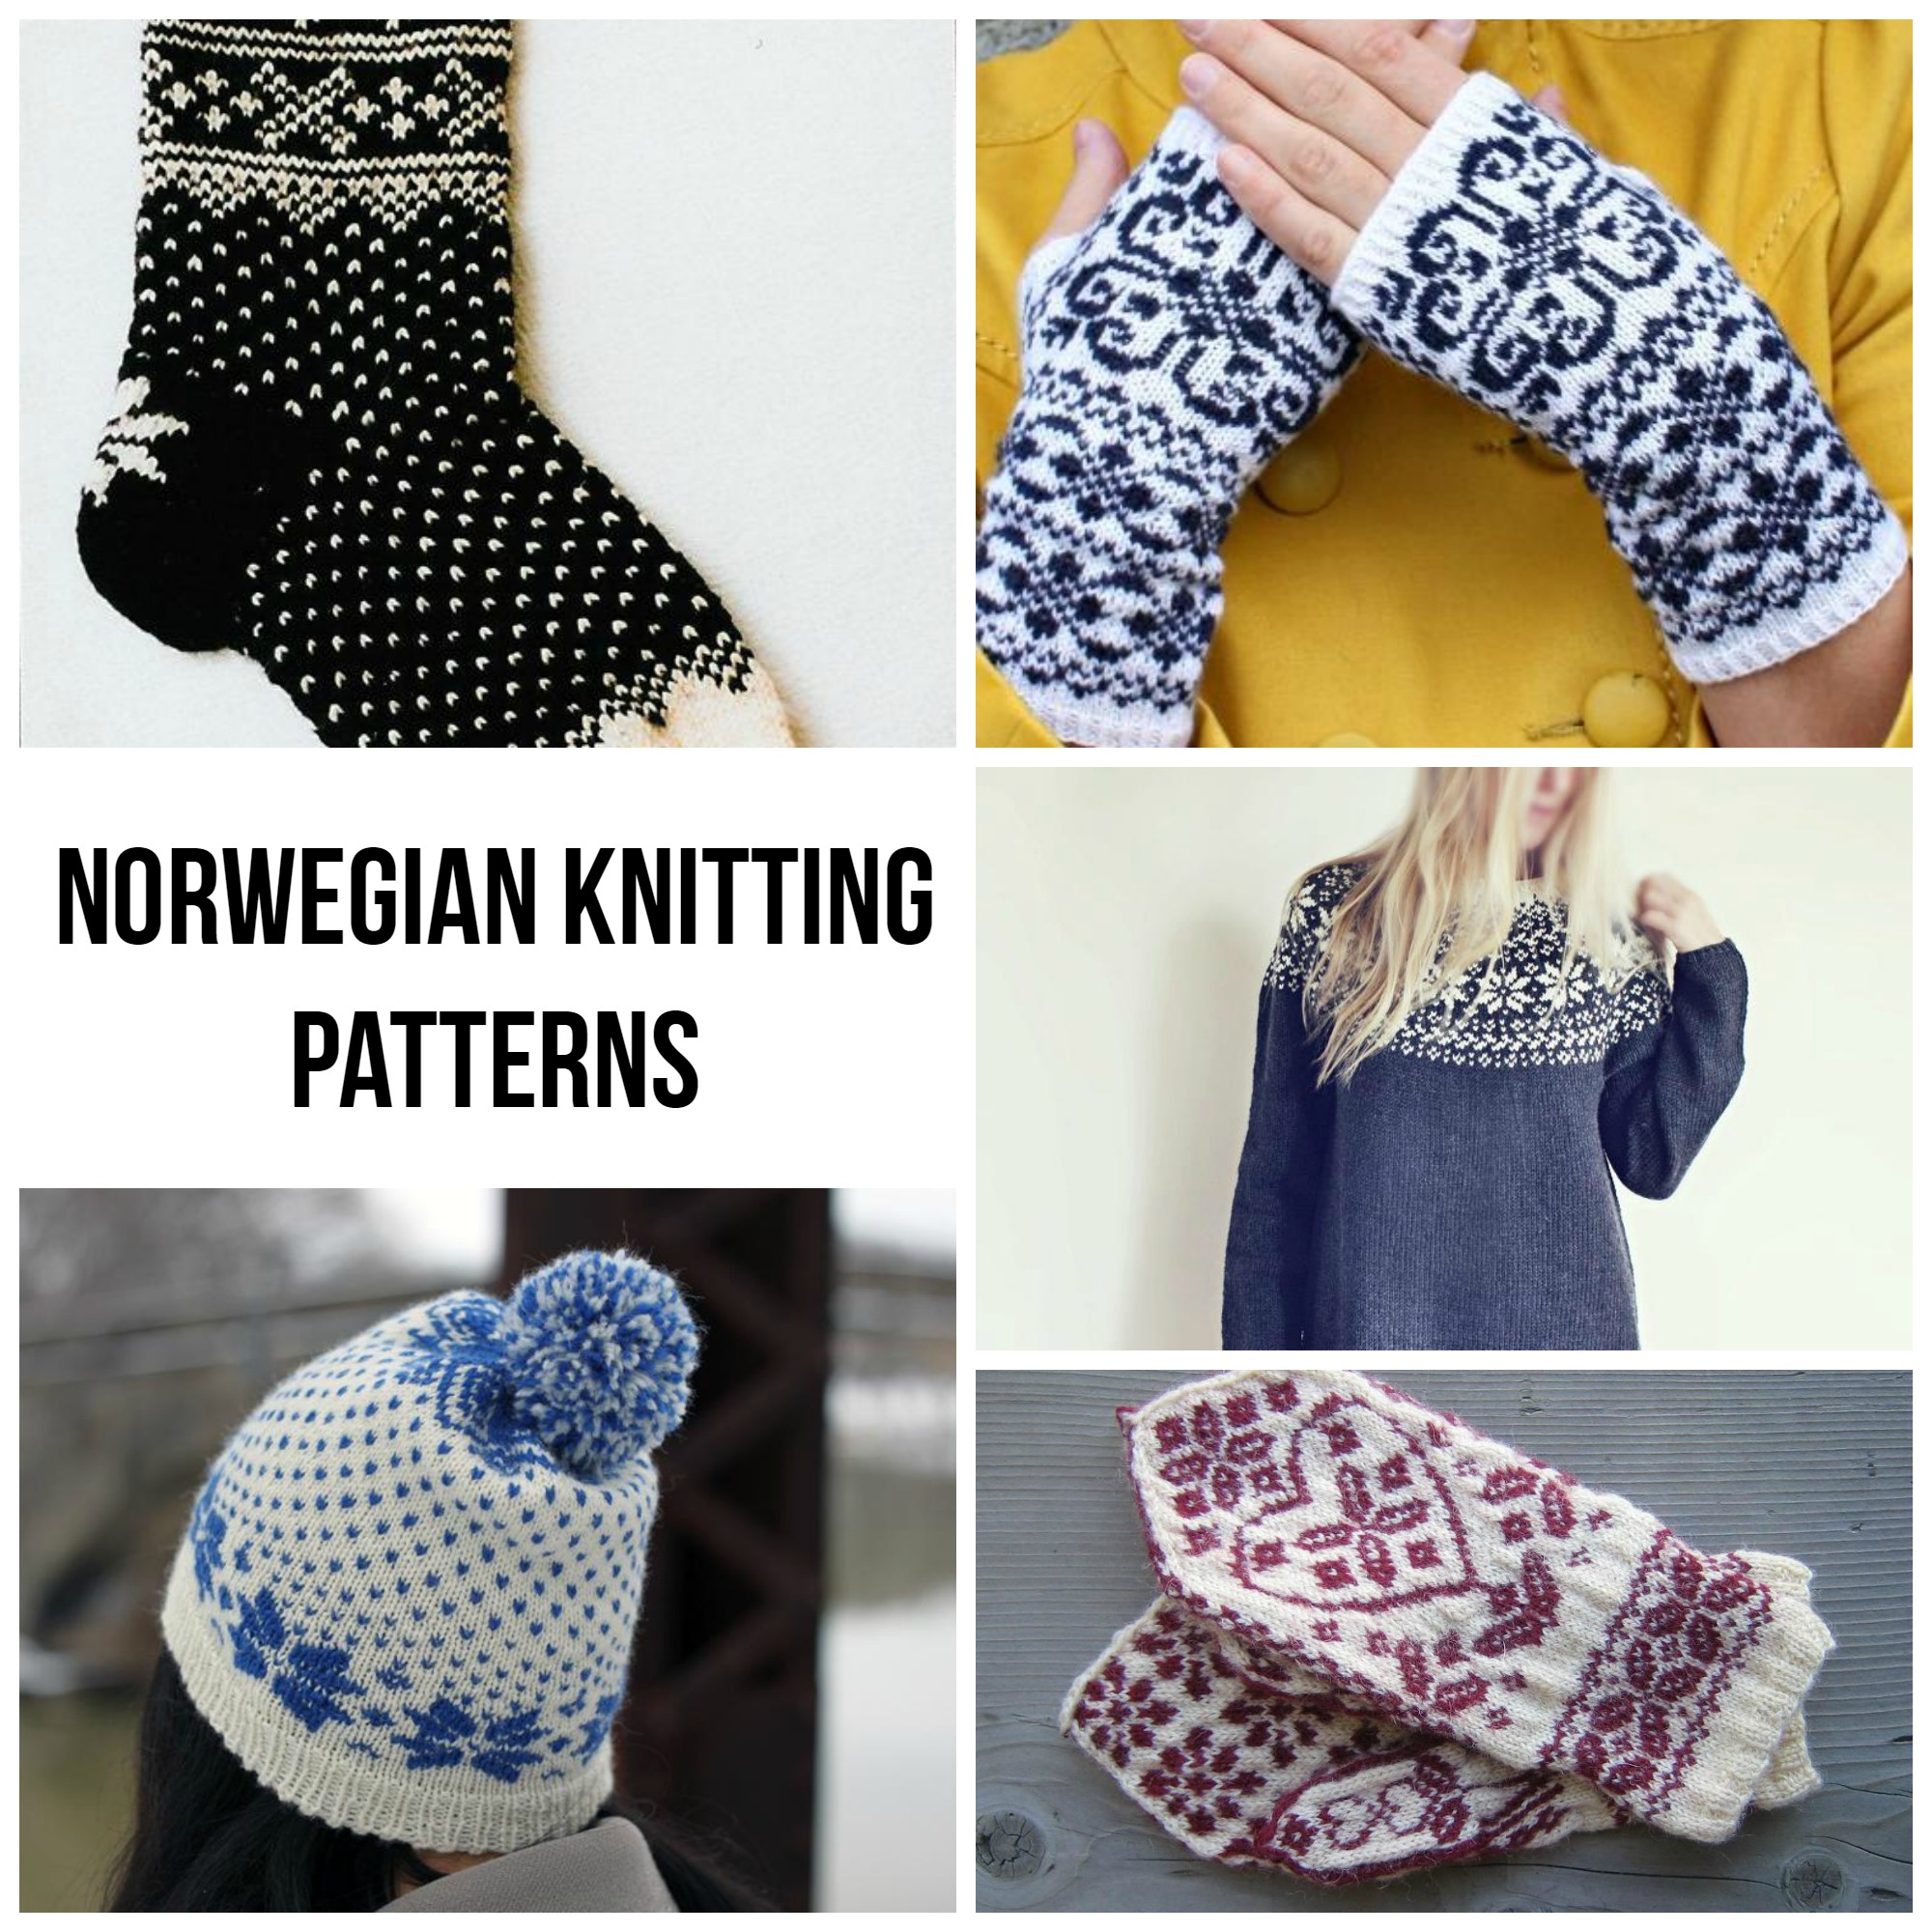 Knitting Patterns Designs Cozy Norwegian Knitting Patterns The Craftsy Blog